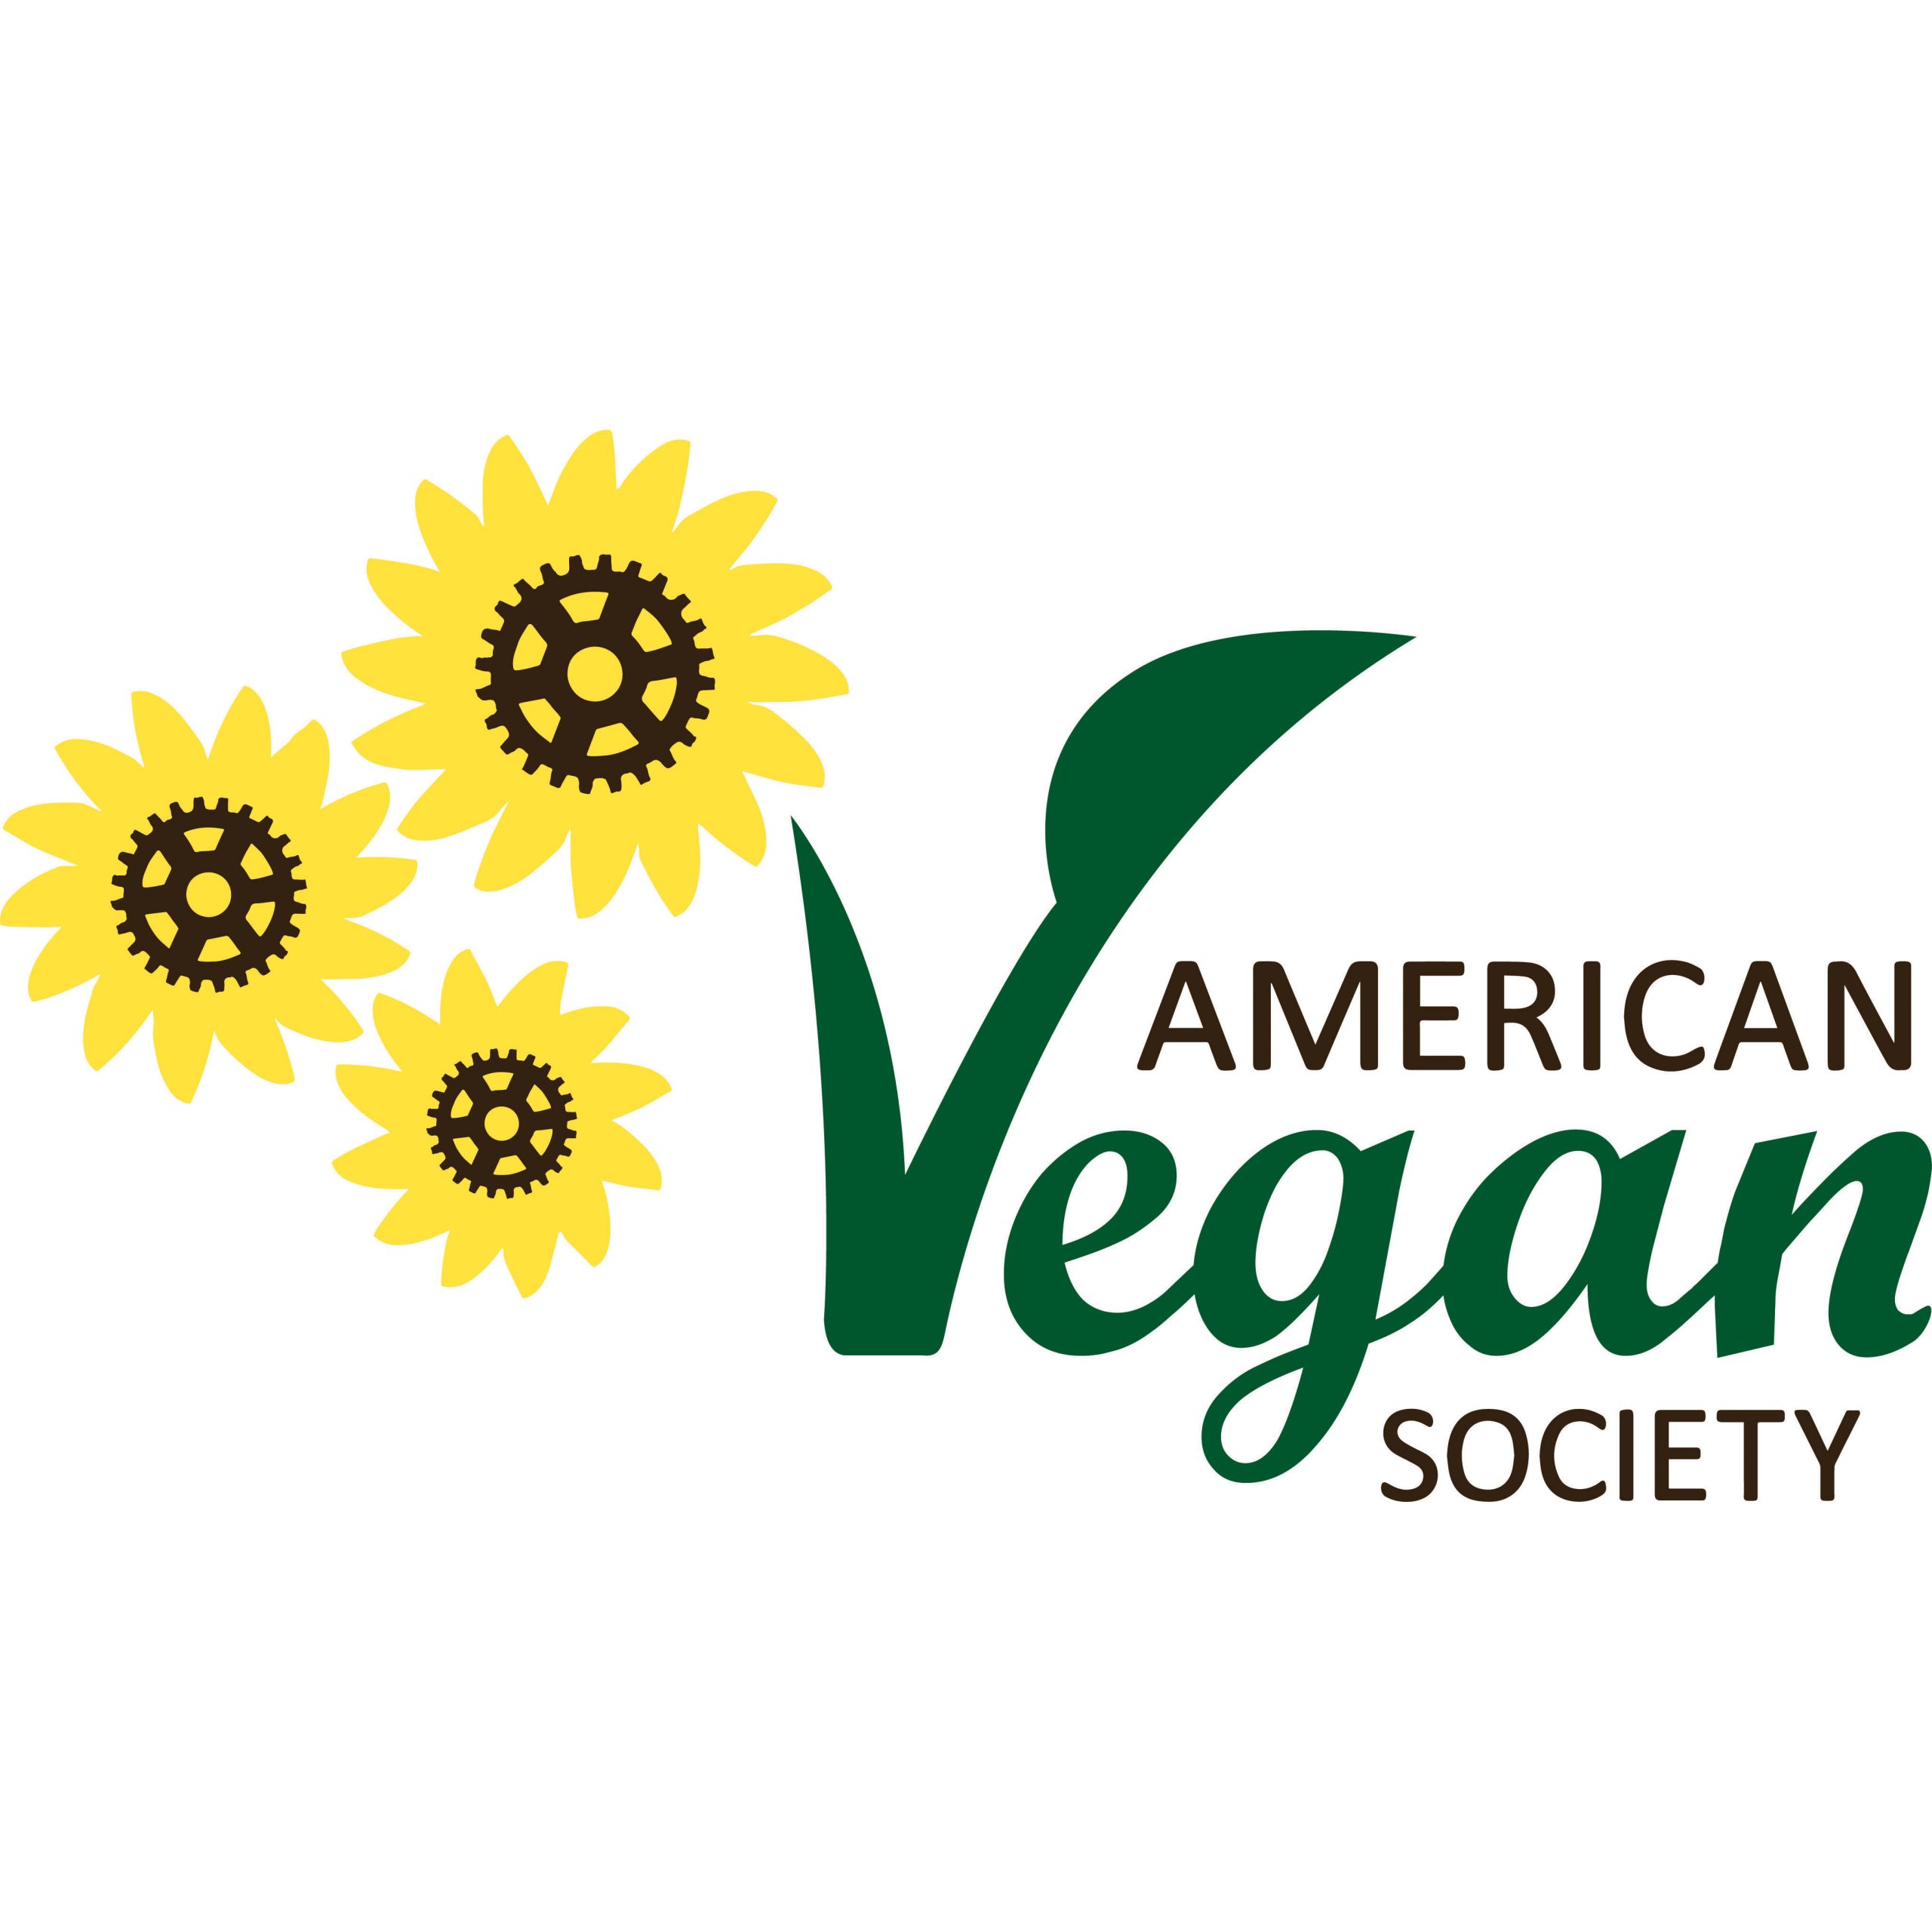 American Vegan Society